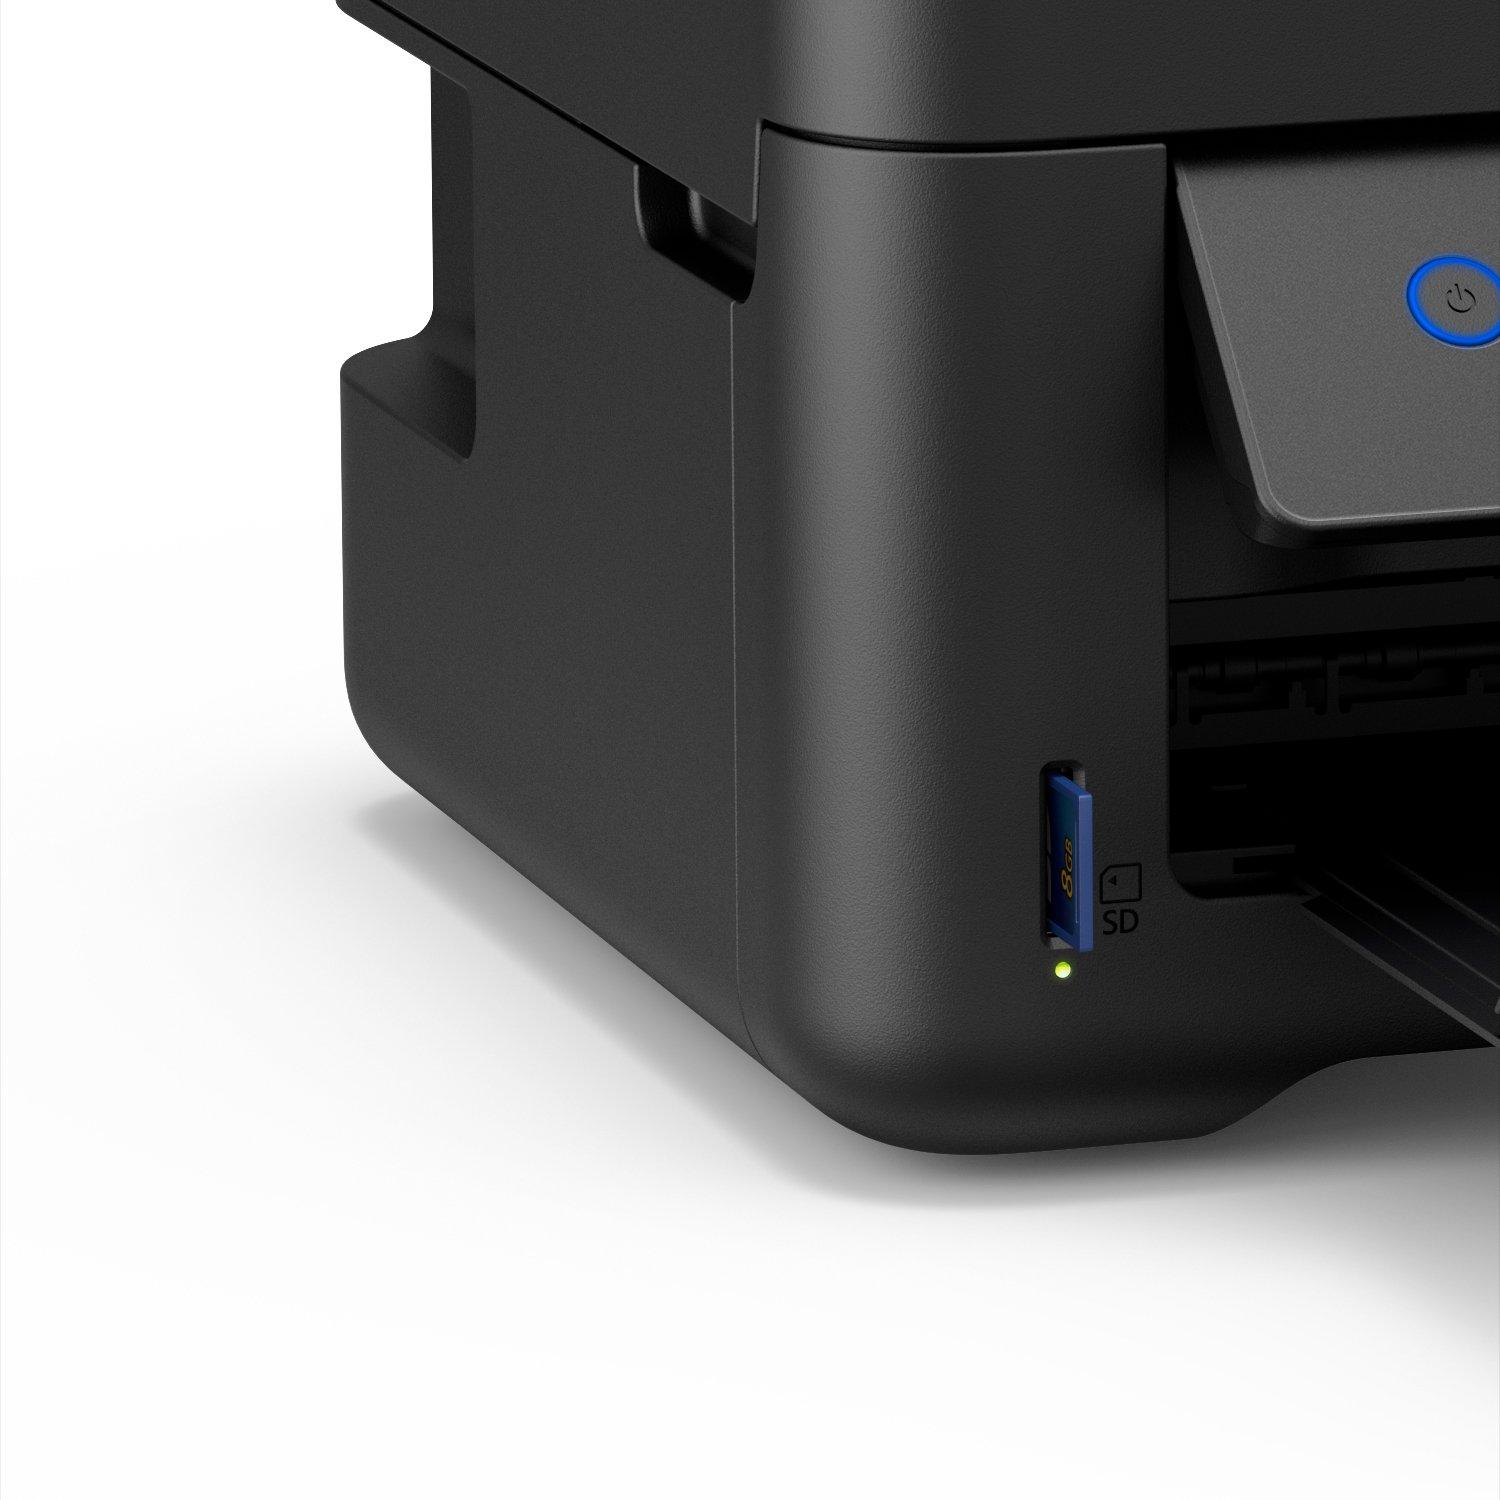 Impresora Multifuncional Epson EcoTank L4160 WIFI - PCSYSTEM